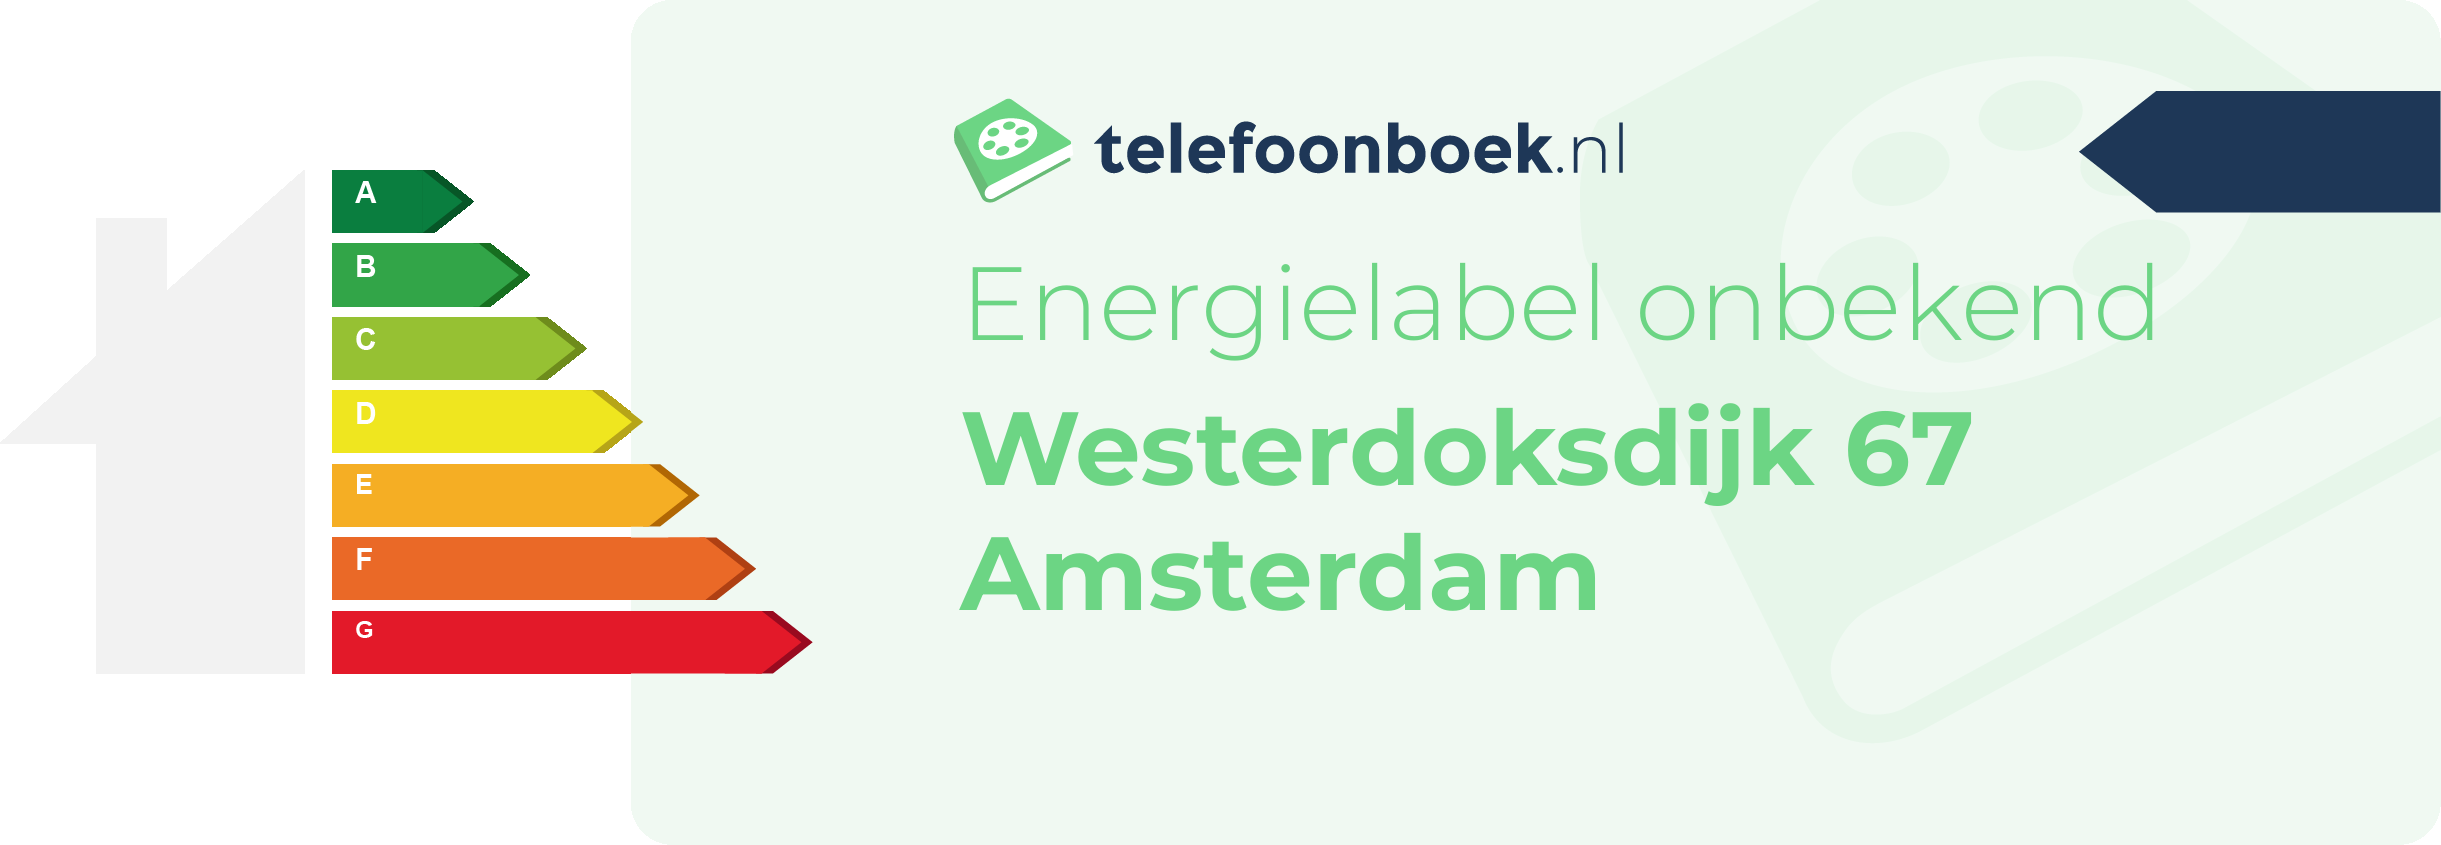 Energielabel Westerdoksdijk 67 Amsterdam